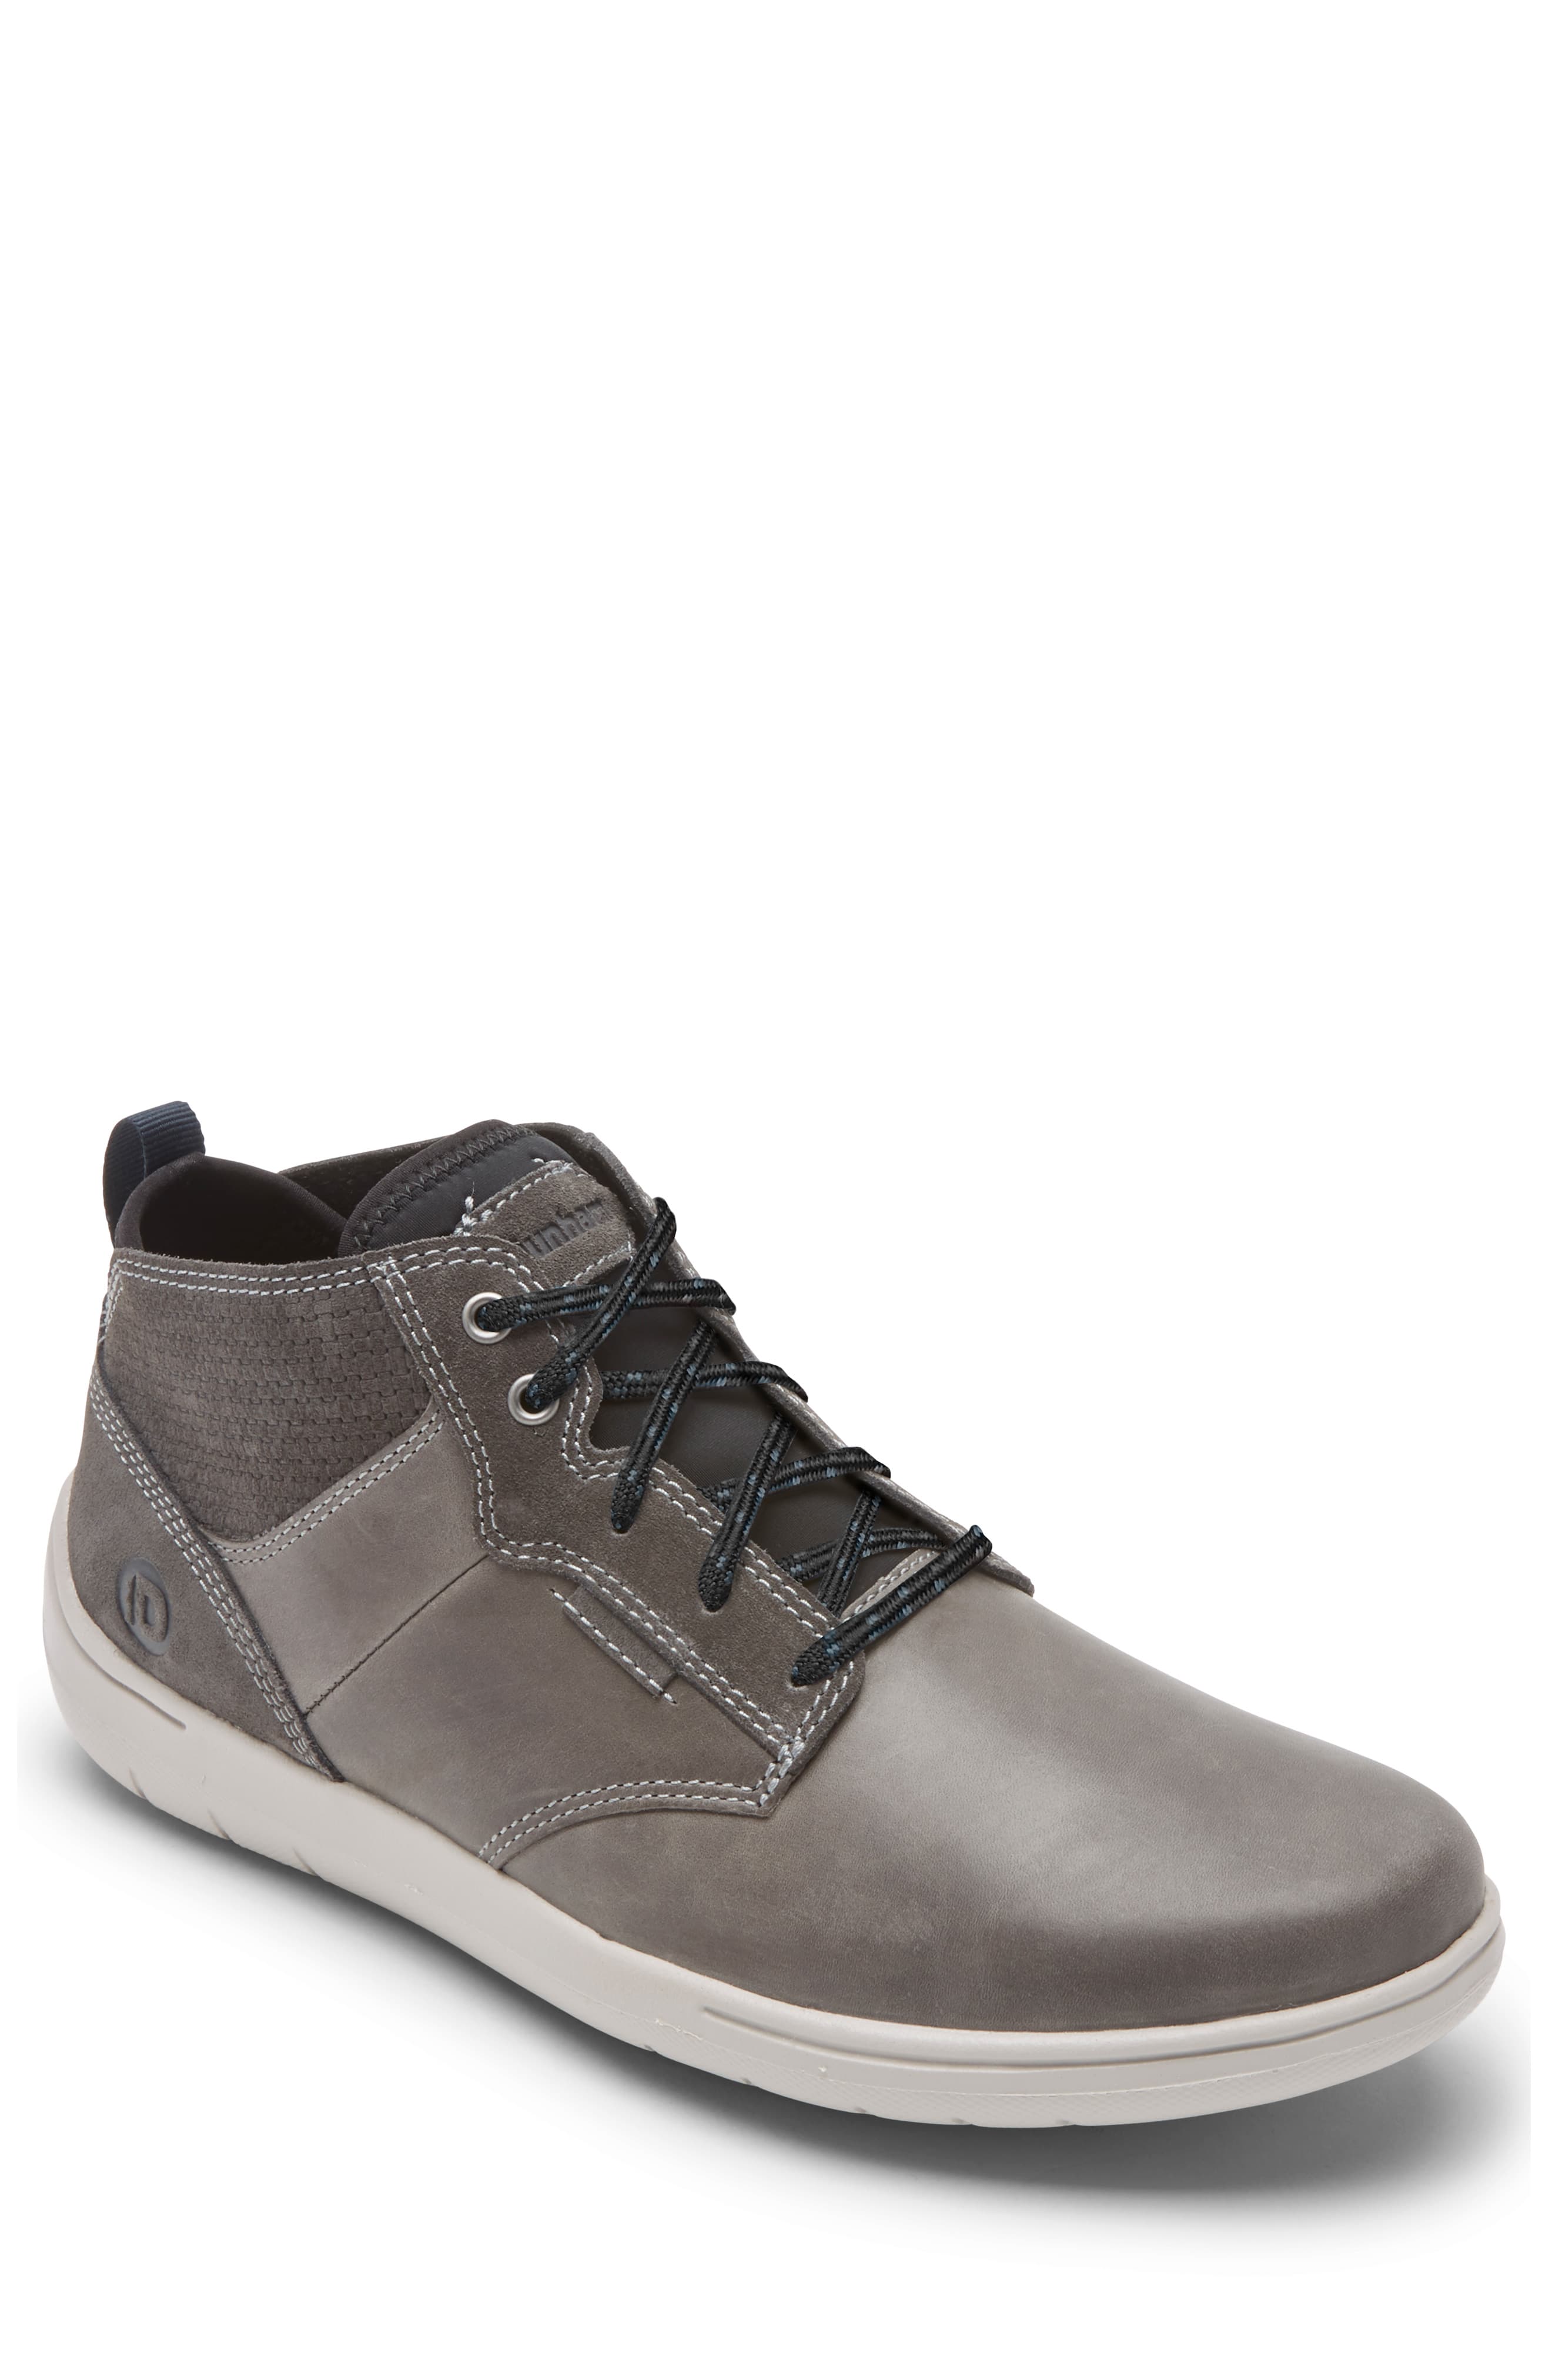 Men’s Dunham Fitsmart Chukka Boot, Size 8 EE – Grey | The Fashionisto